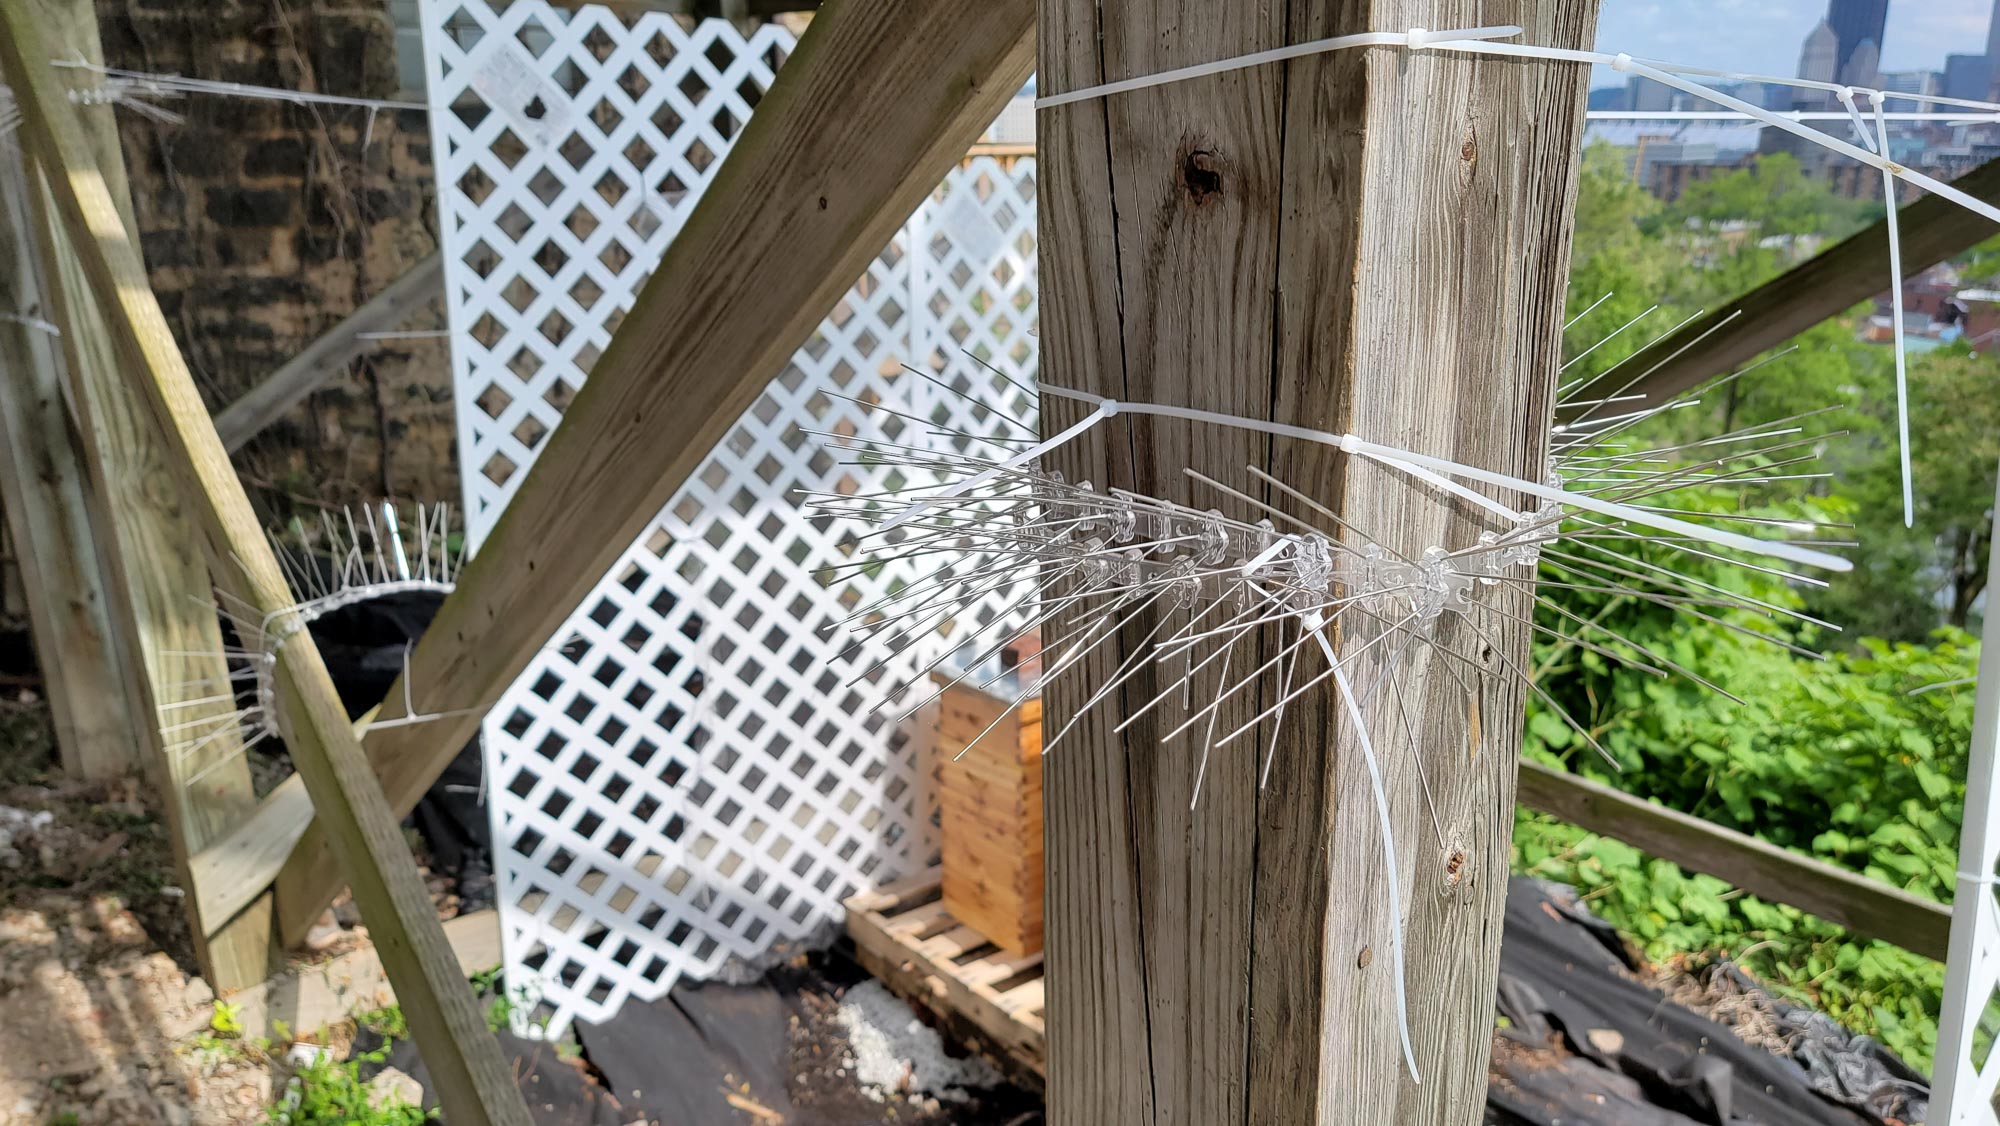 Spike Strips Stopped a Raccoon in a Garden